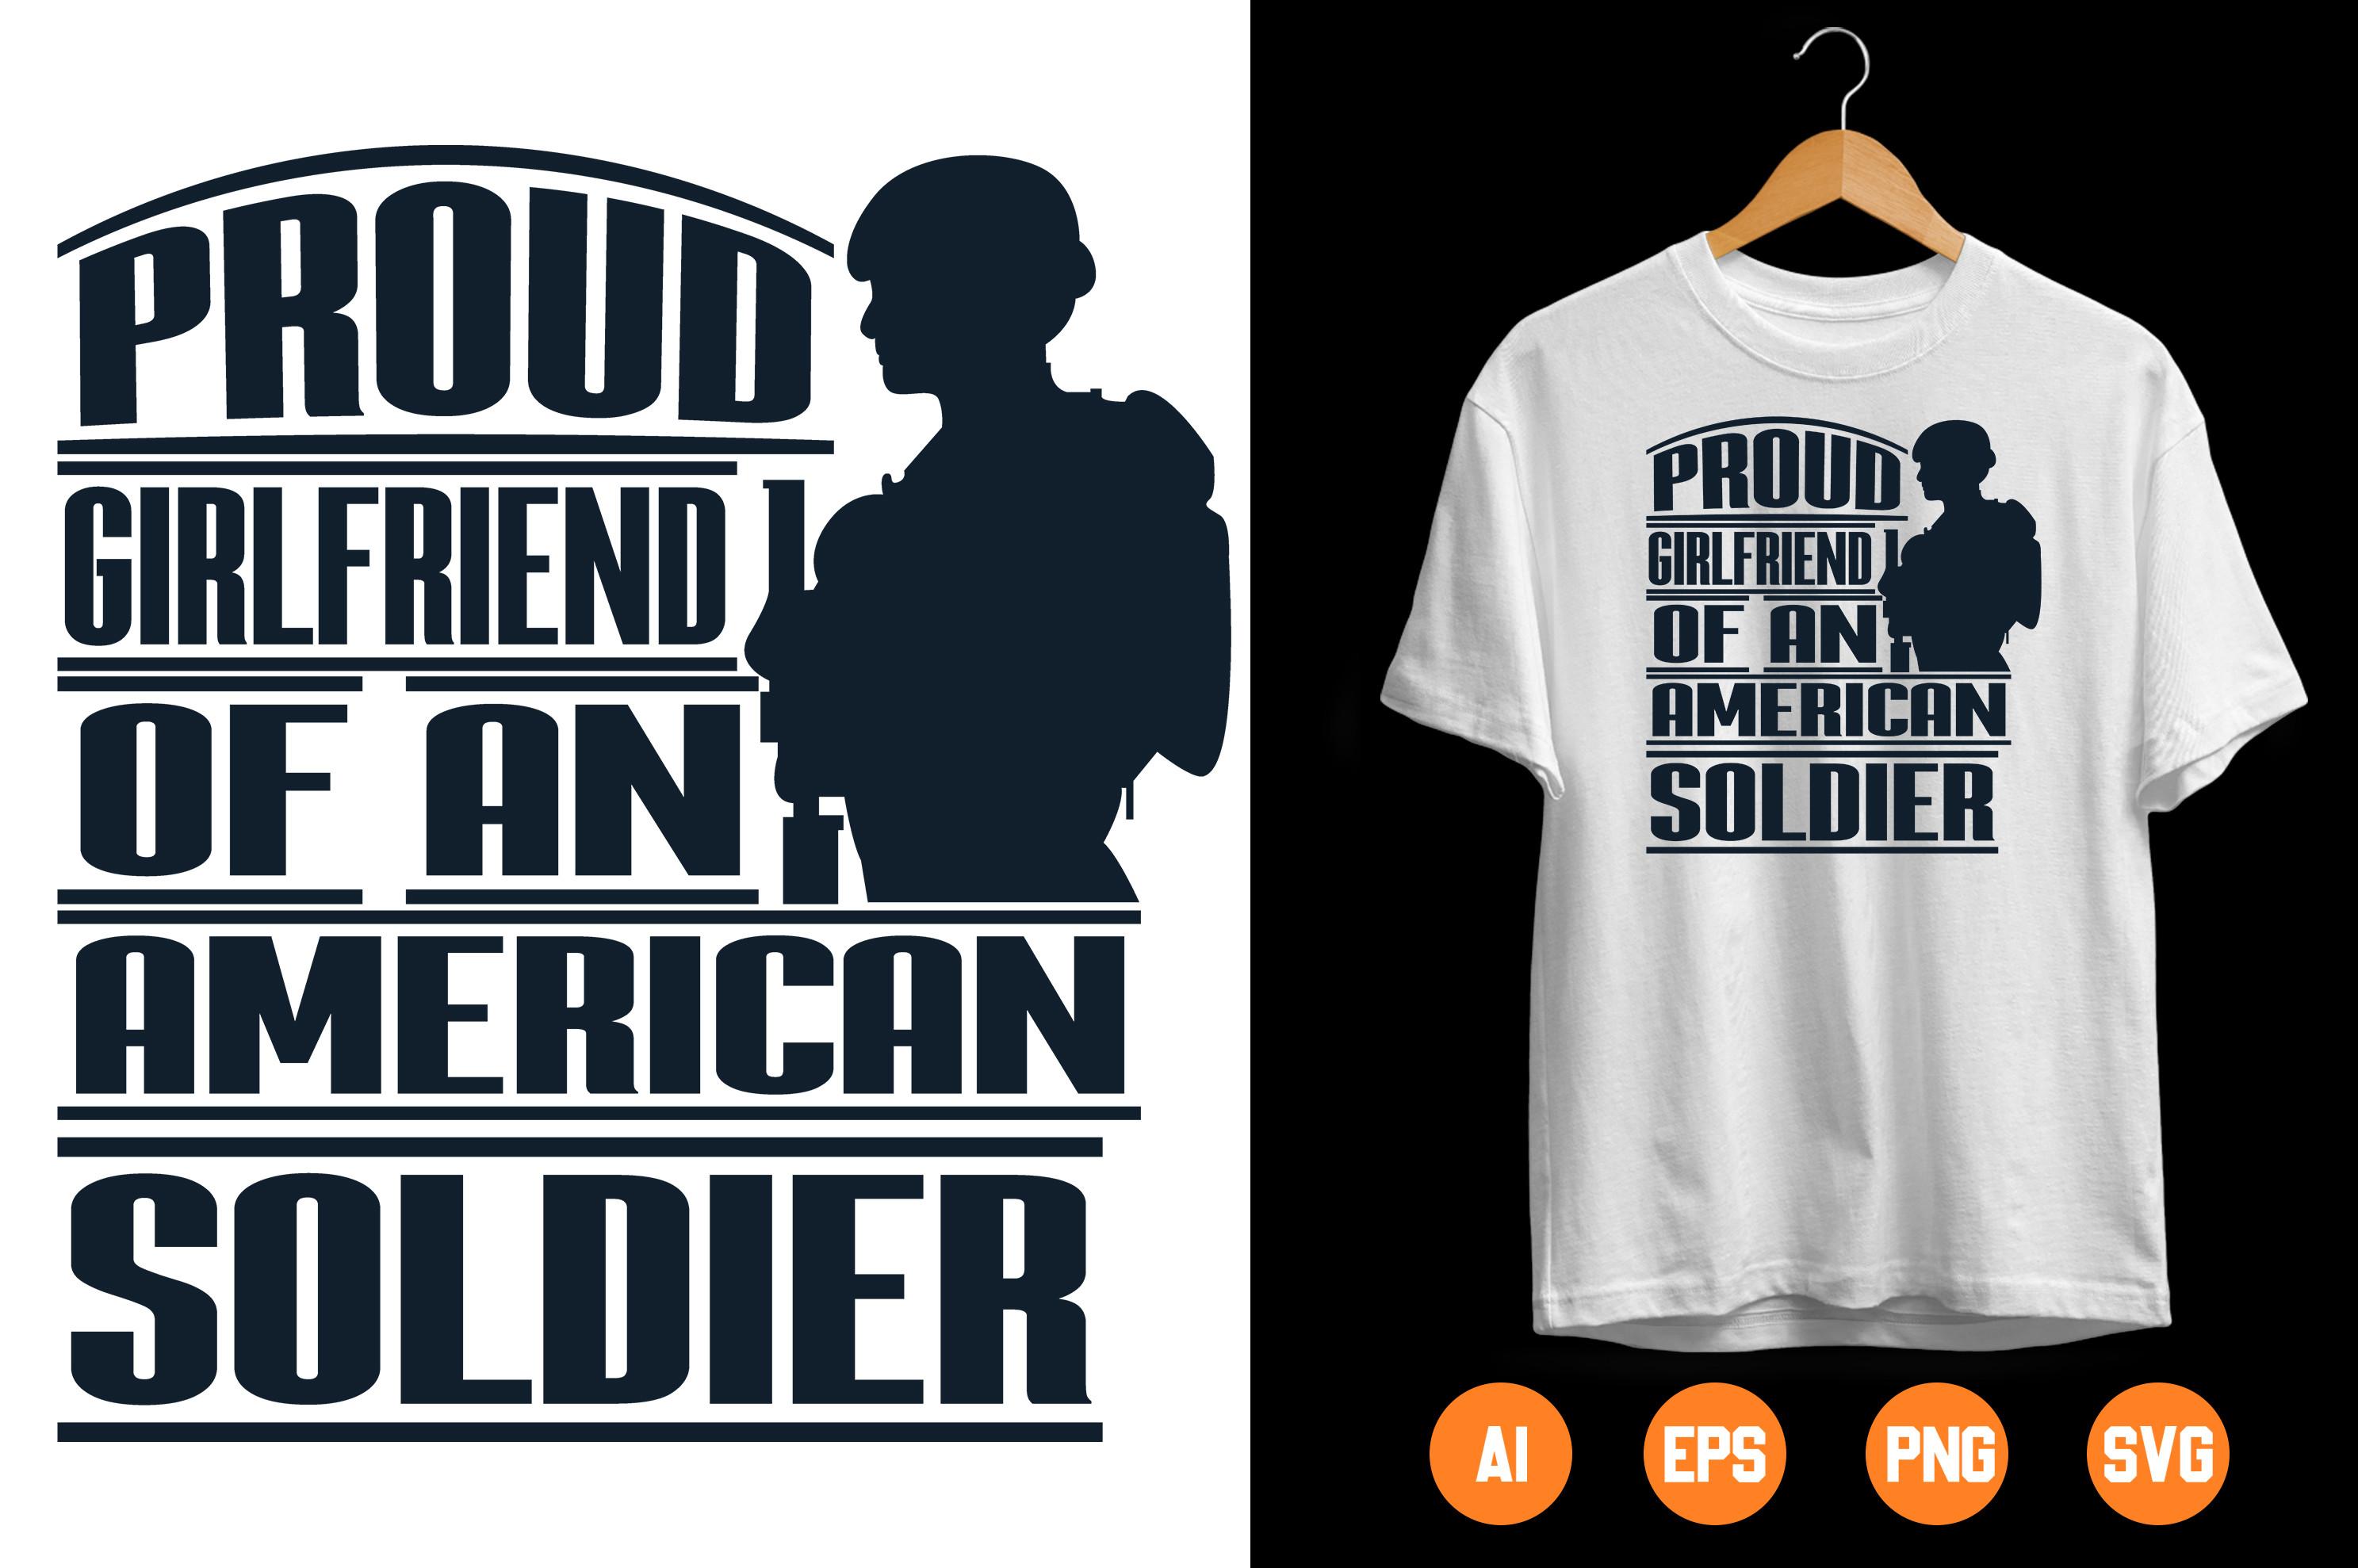 USA Army T-shirt Design 1